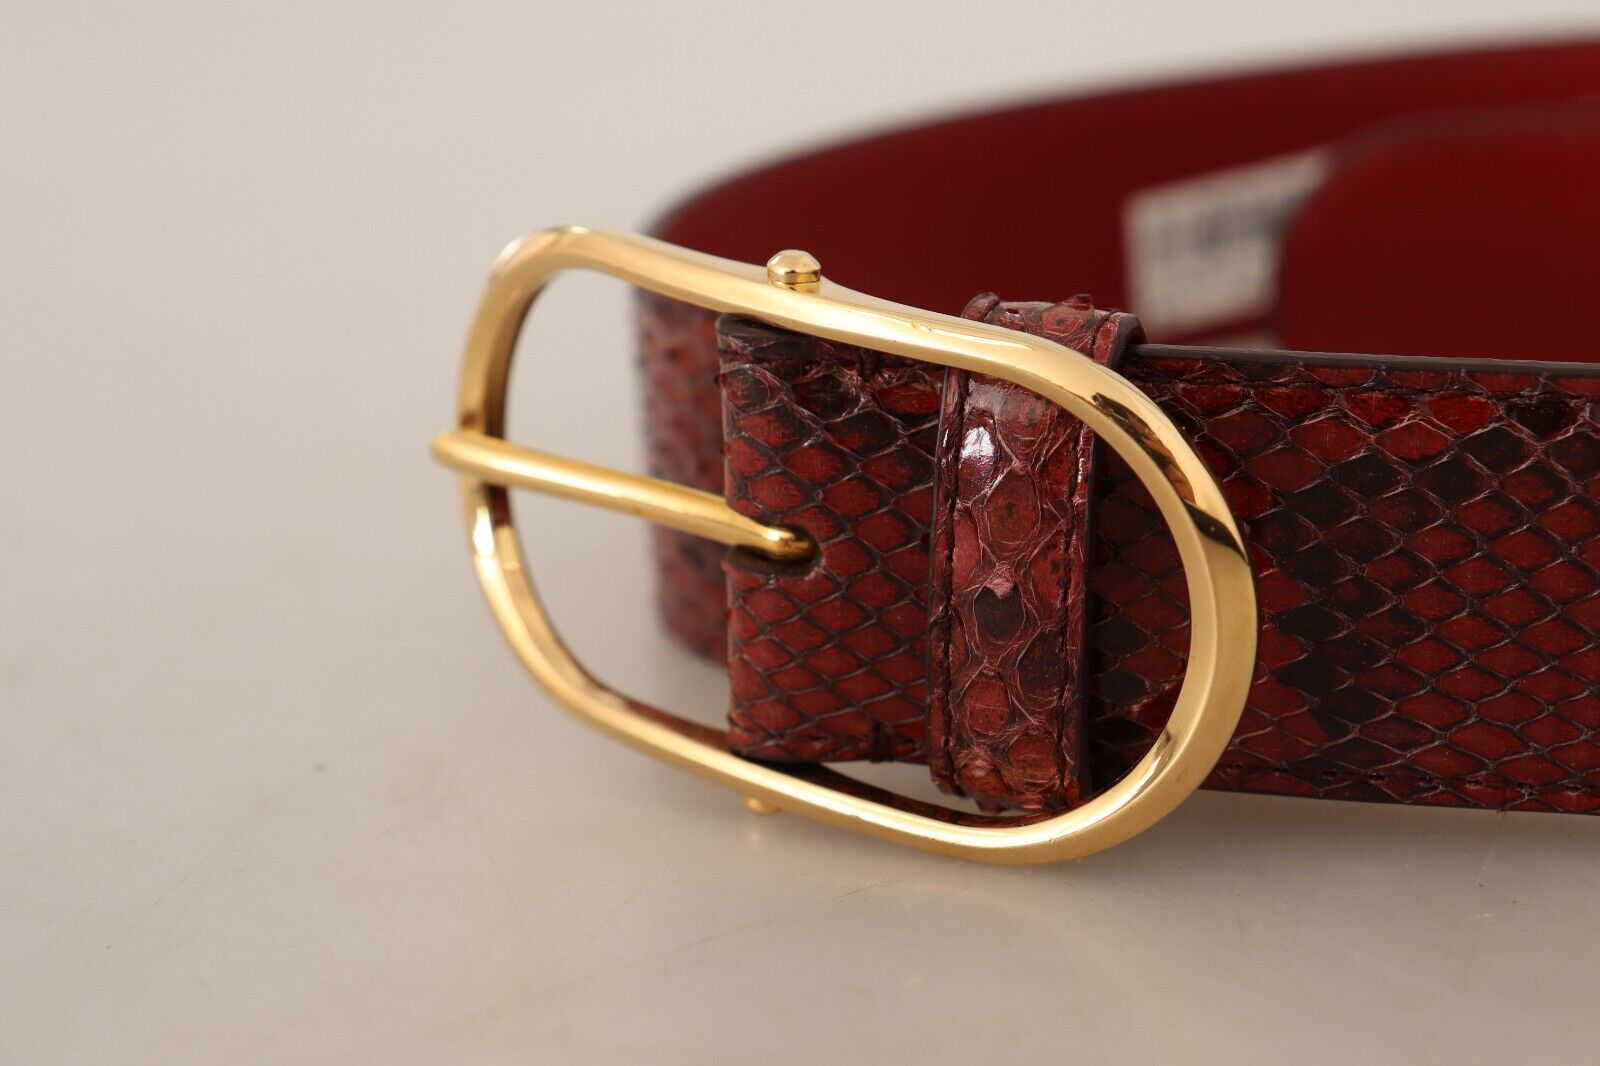 Dolce & Gabbana Elegant Red Snakeskin Leather Belt